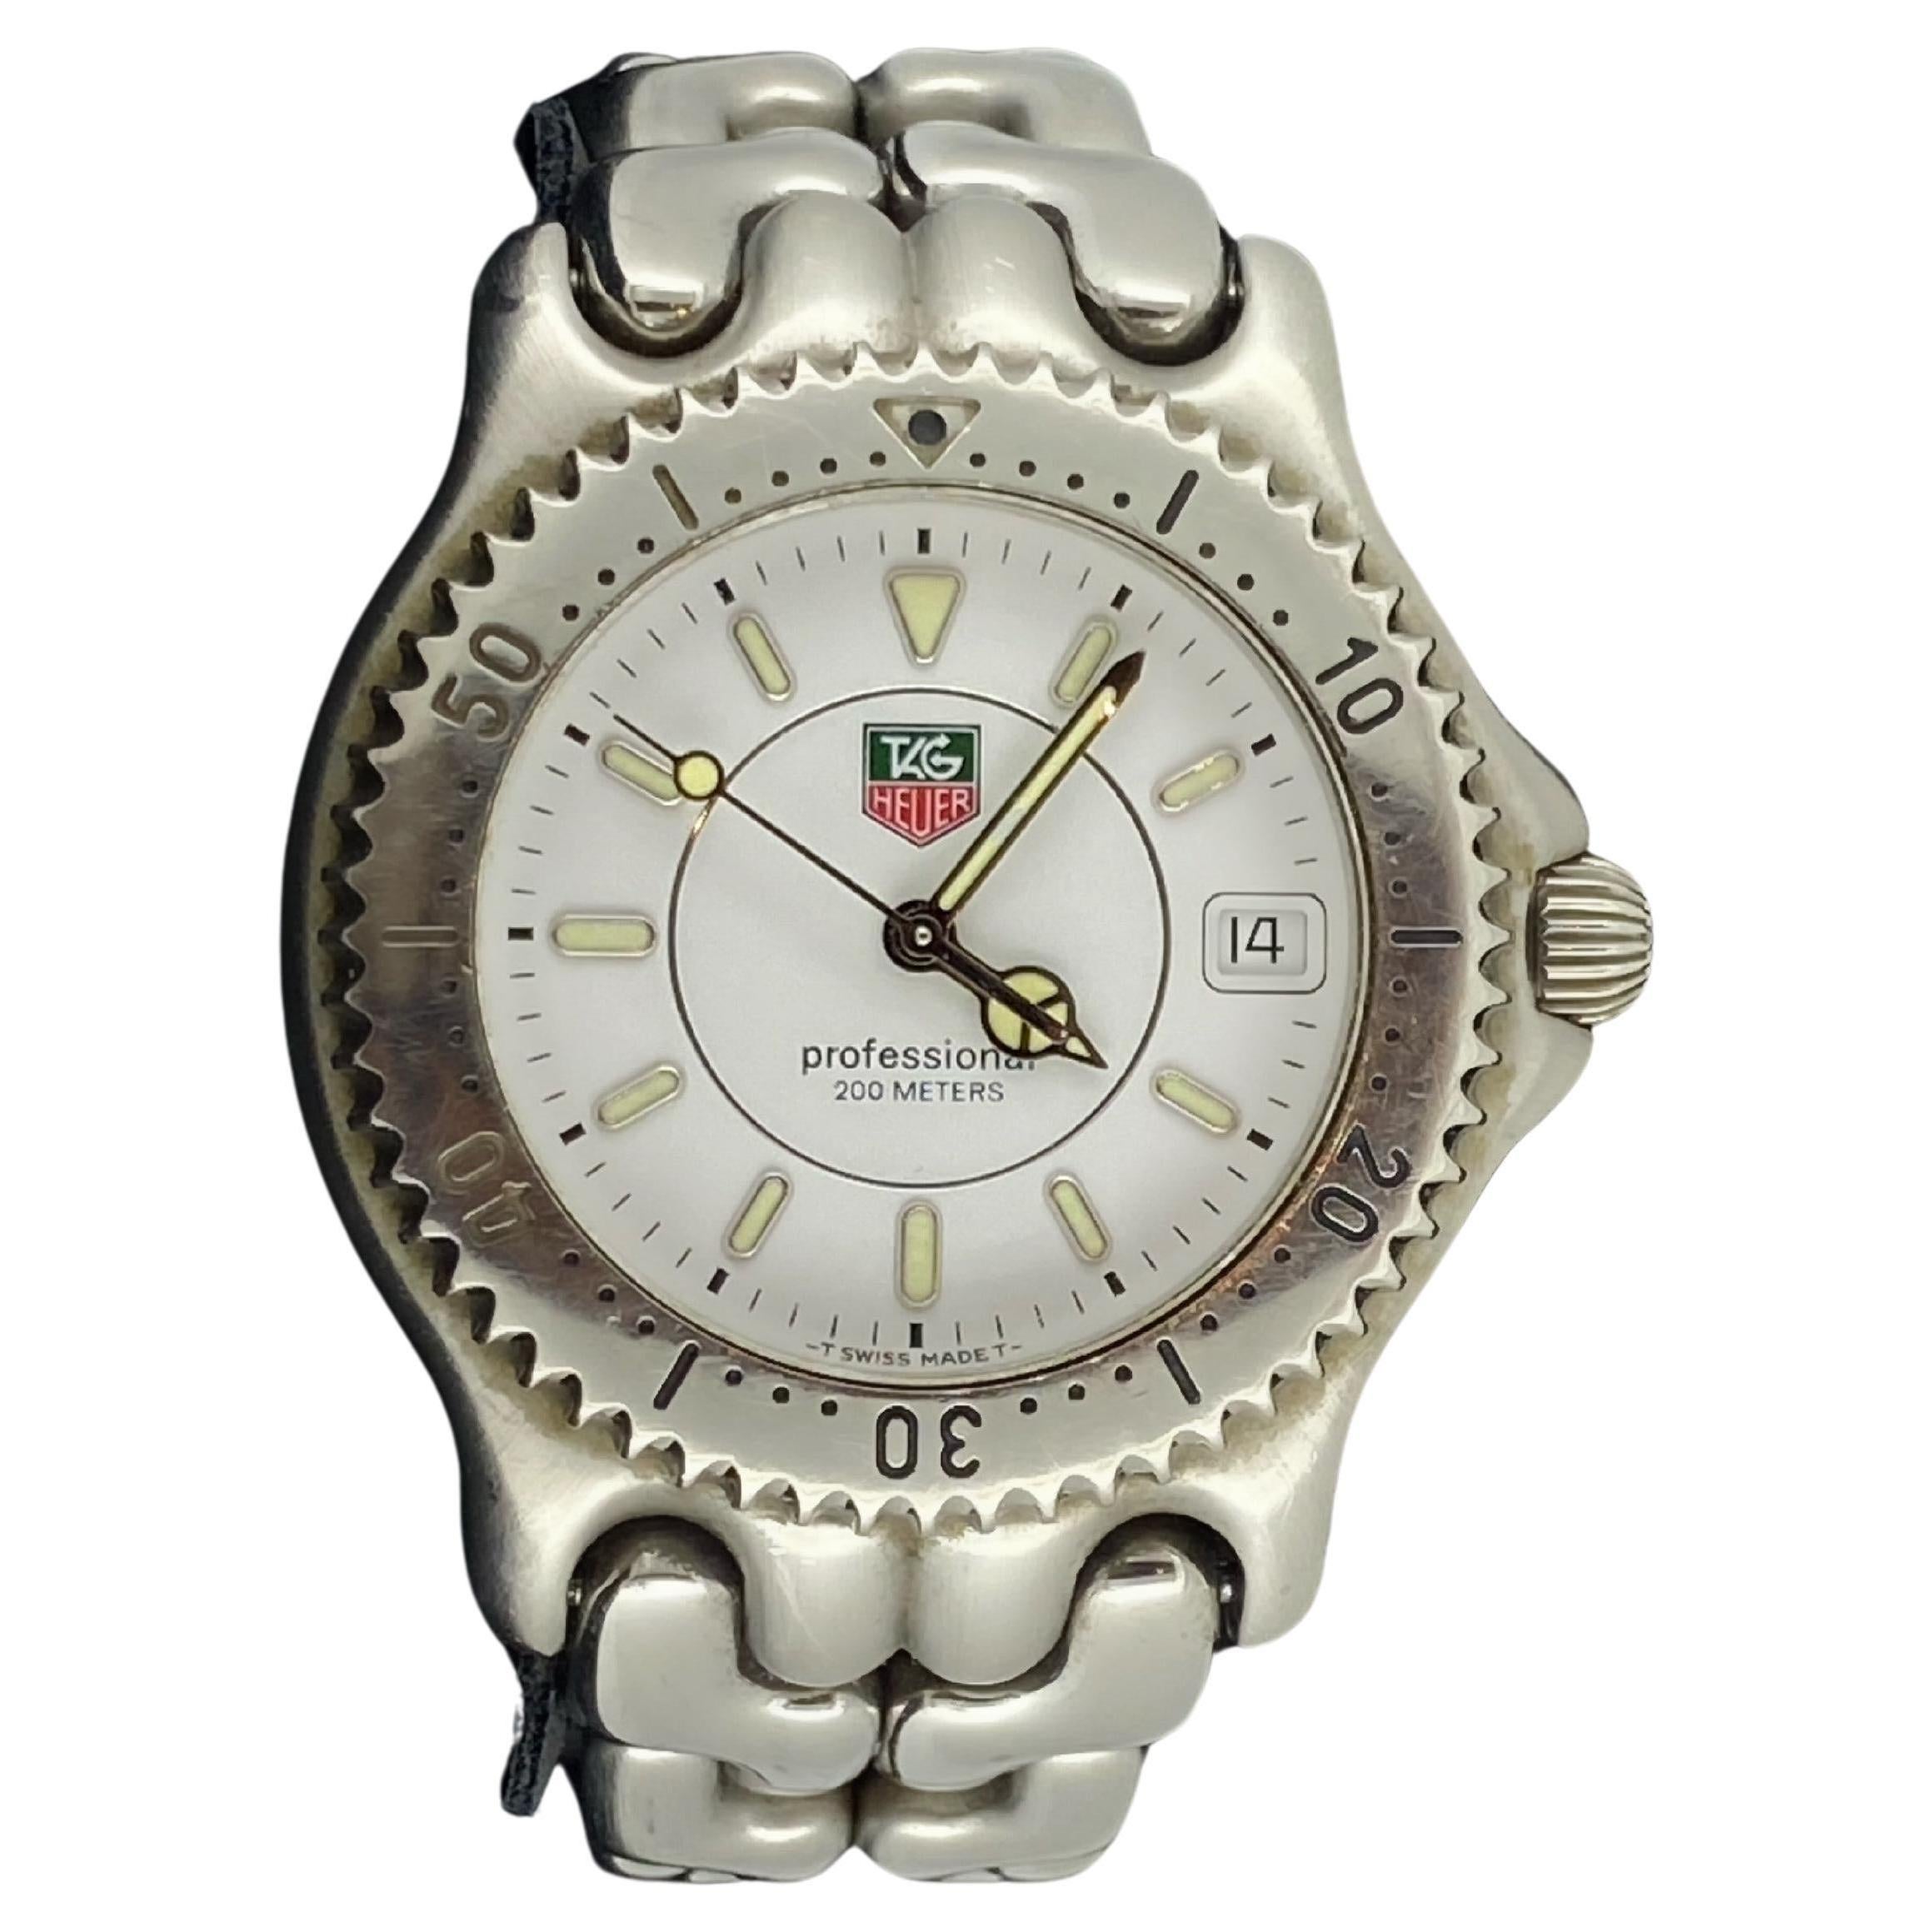 Tag Heuer Professional 200m WG1112KO 38mm S/Steel Quartz Watch, Date + Links For Sale